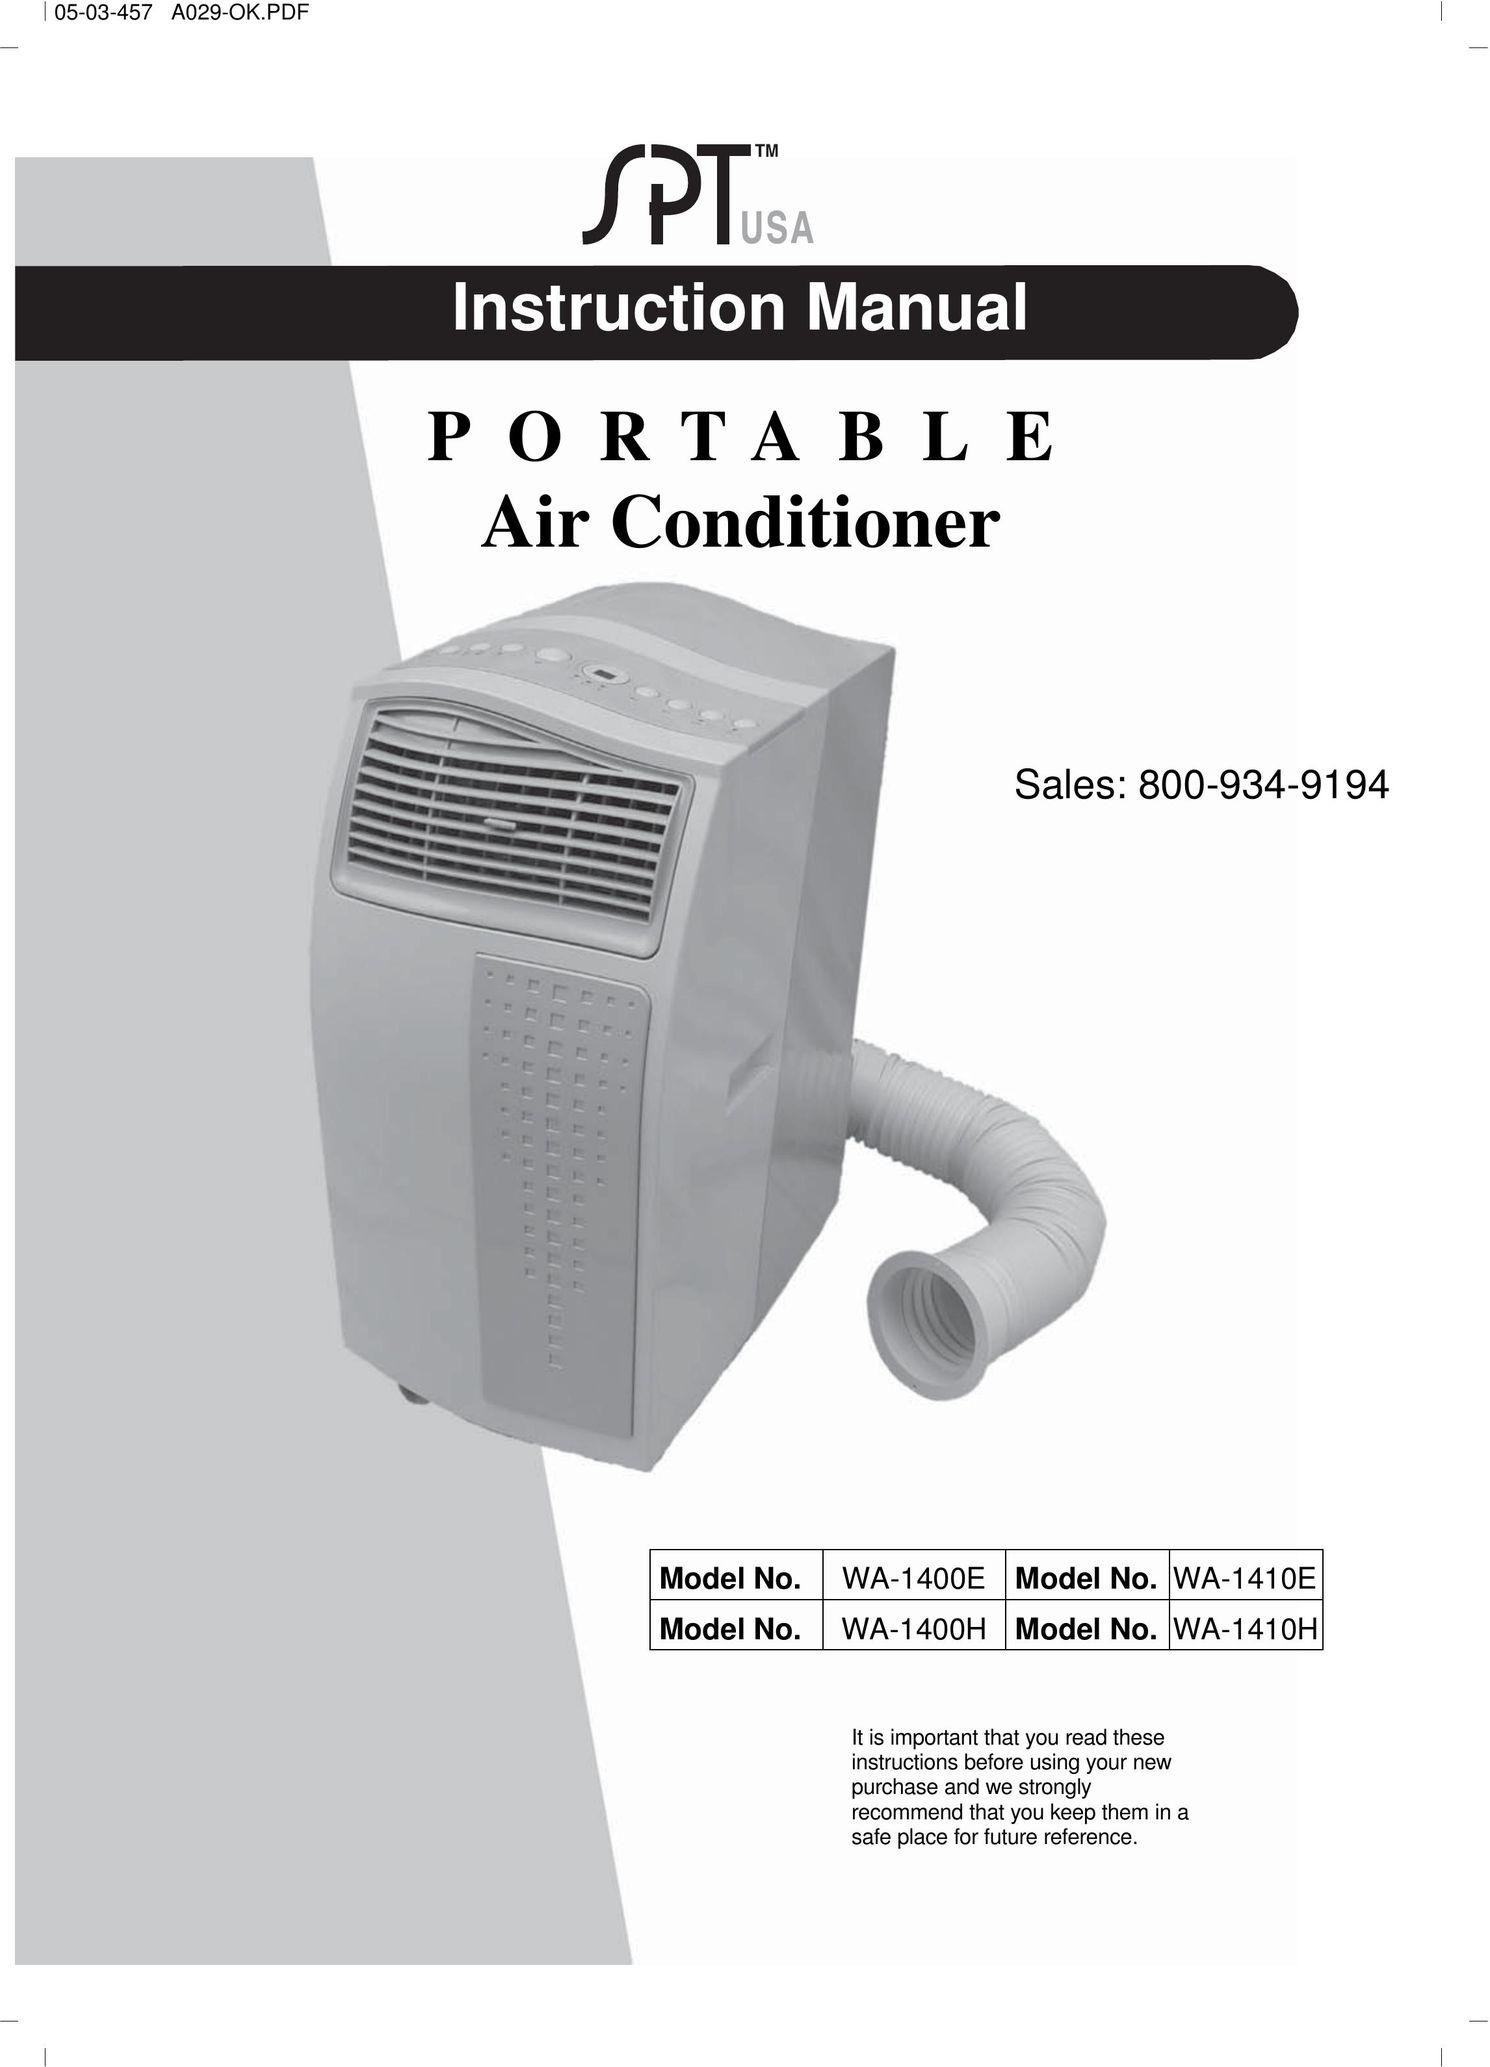 Sunpentown Intl WA-1400E Air Conditioner User Manual